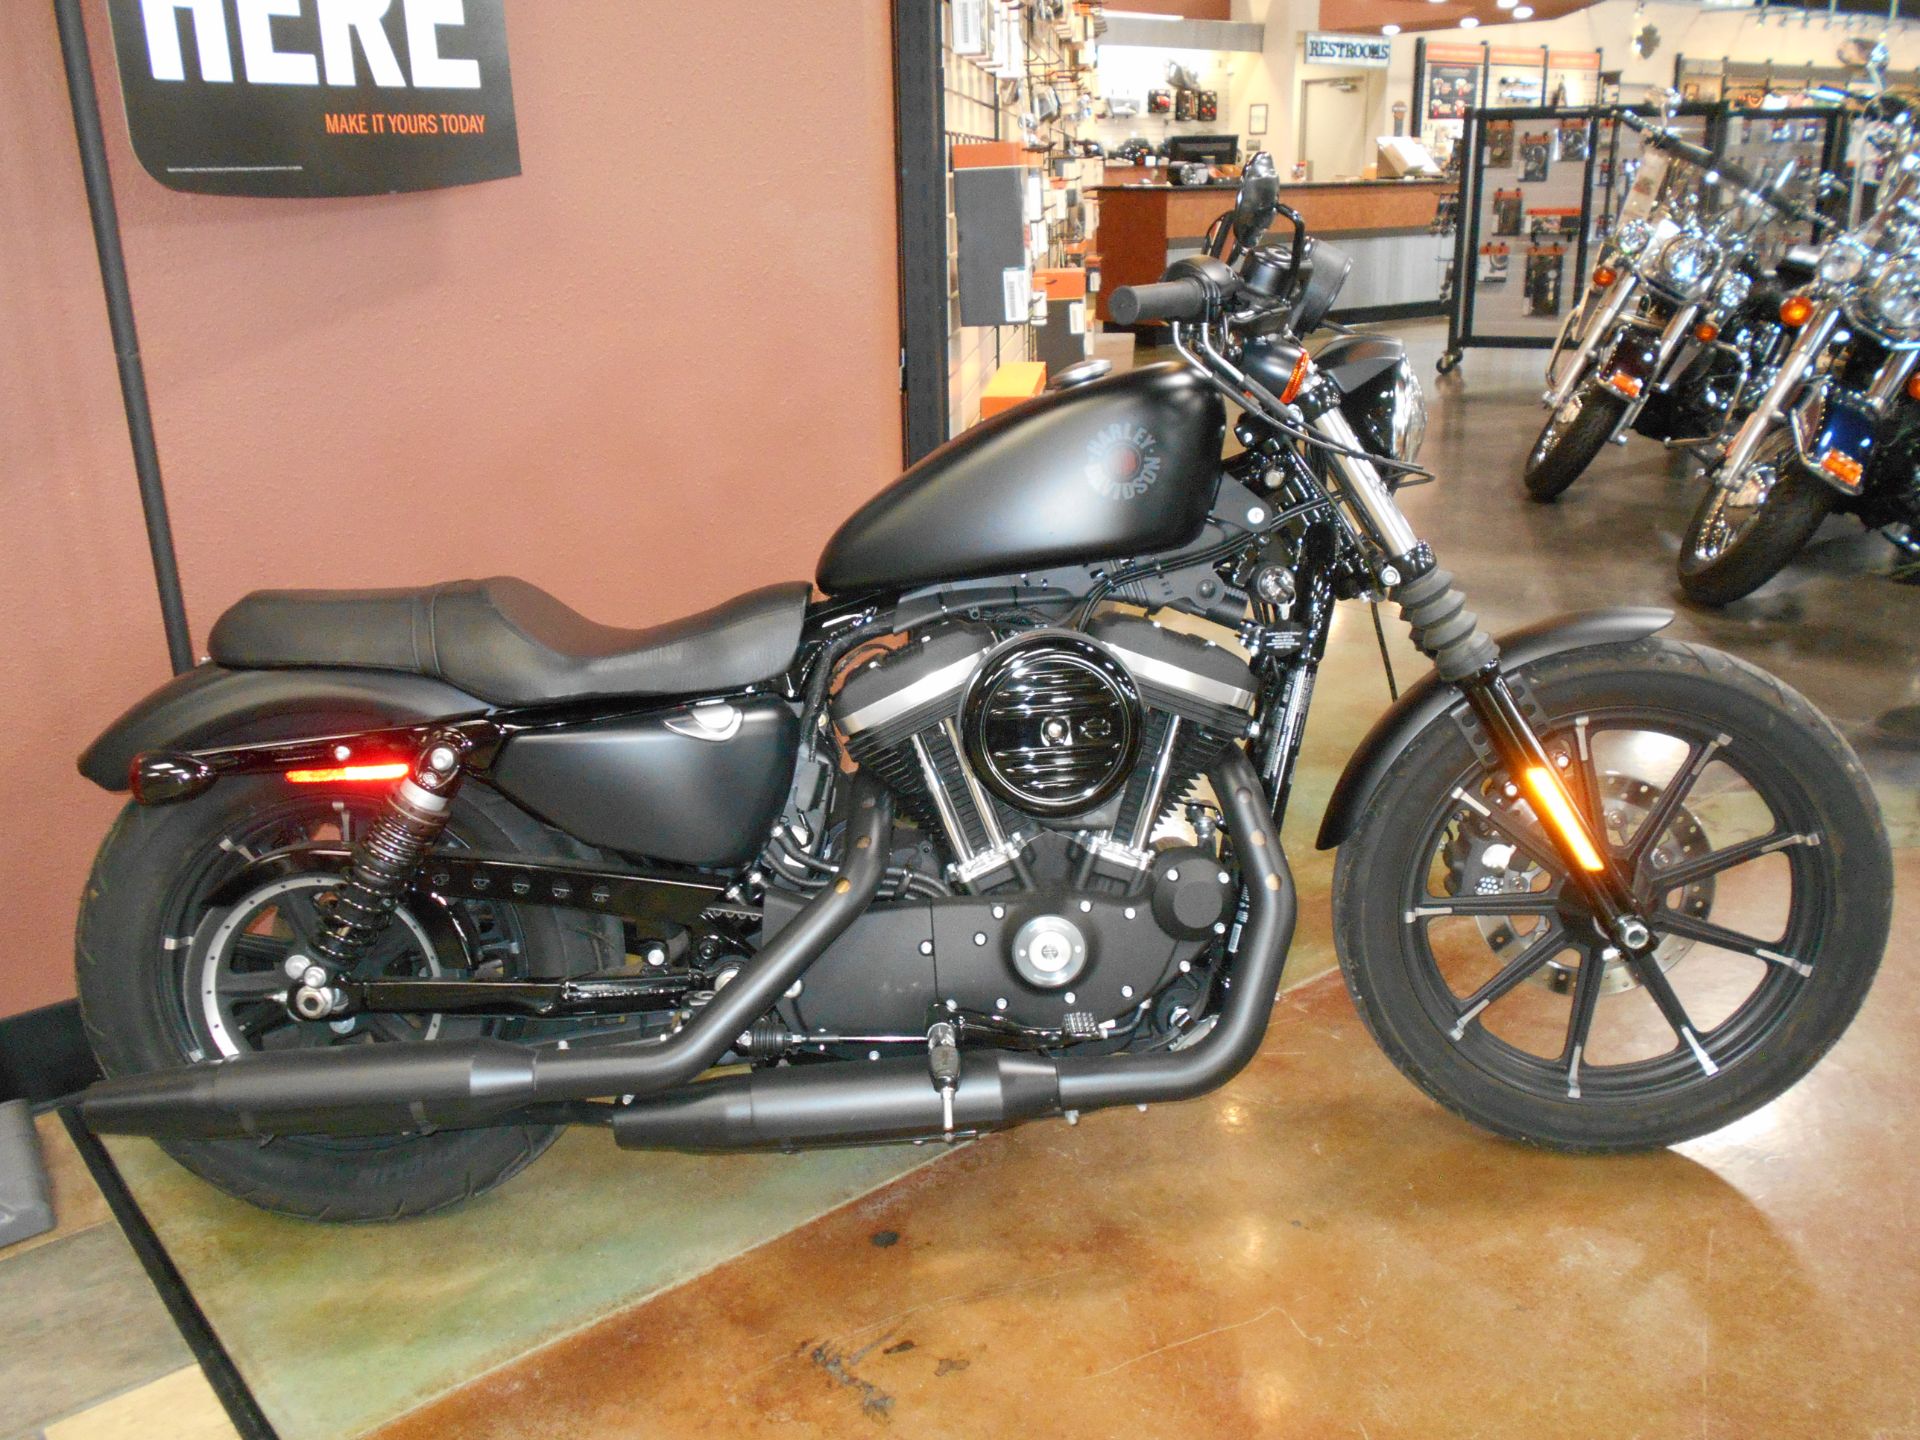 2021 Harley-Davidson Iron 883™ in Mauston, Wisconsin - Photo 1